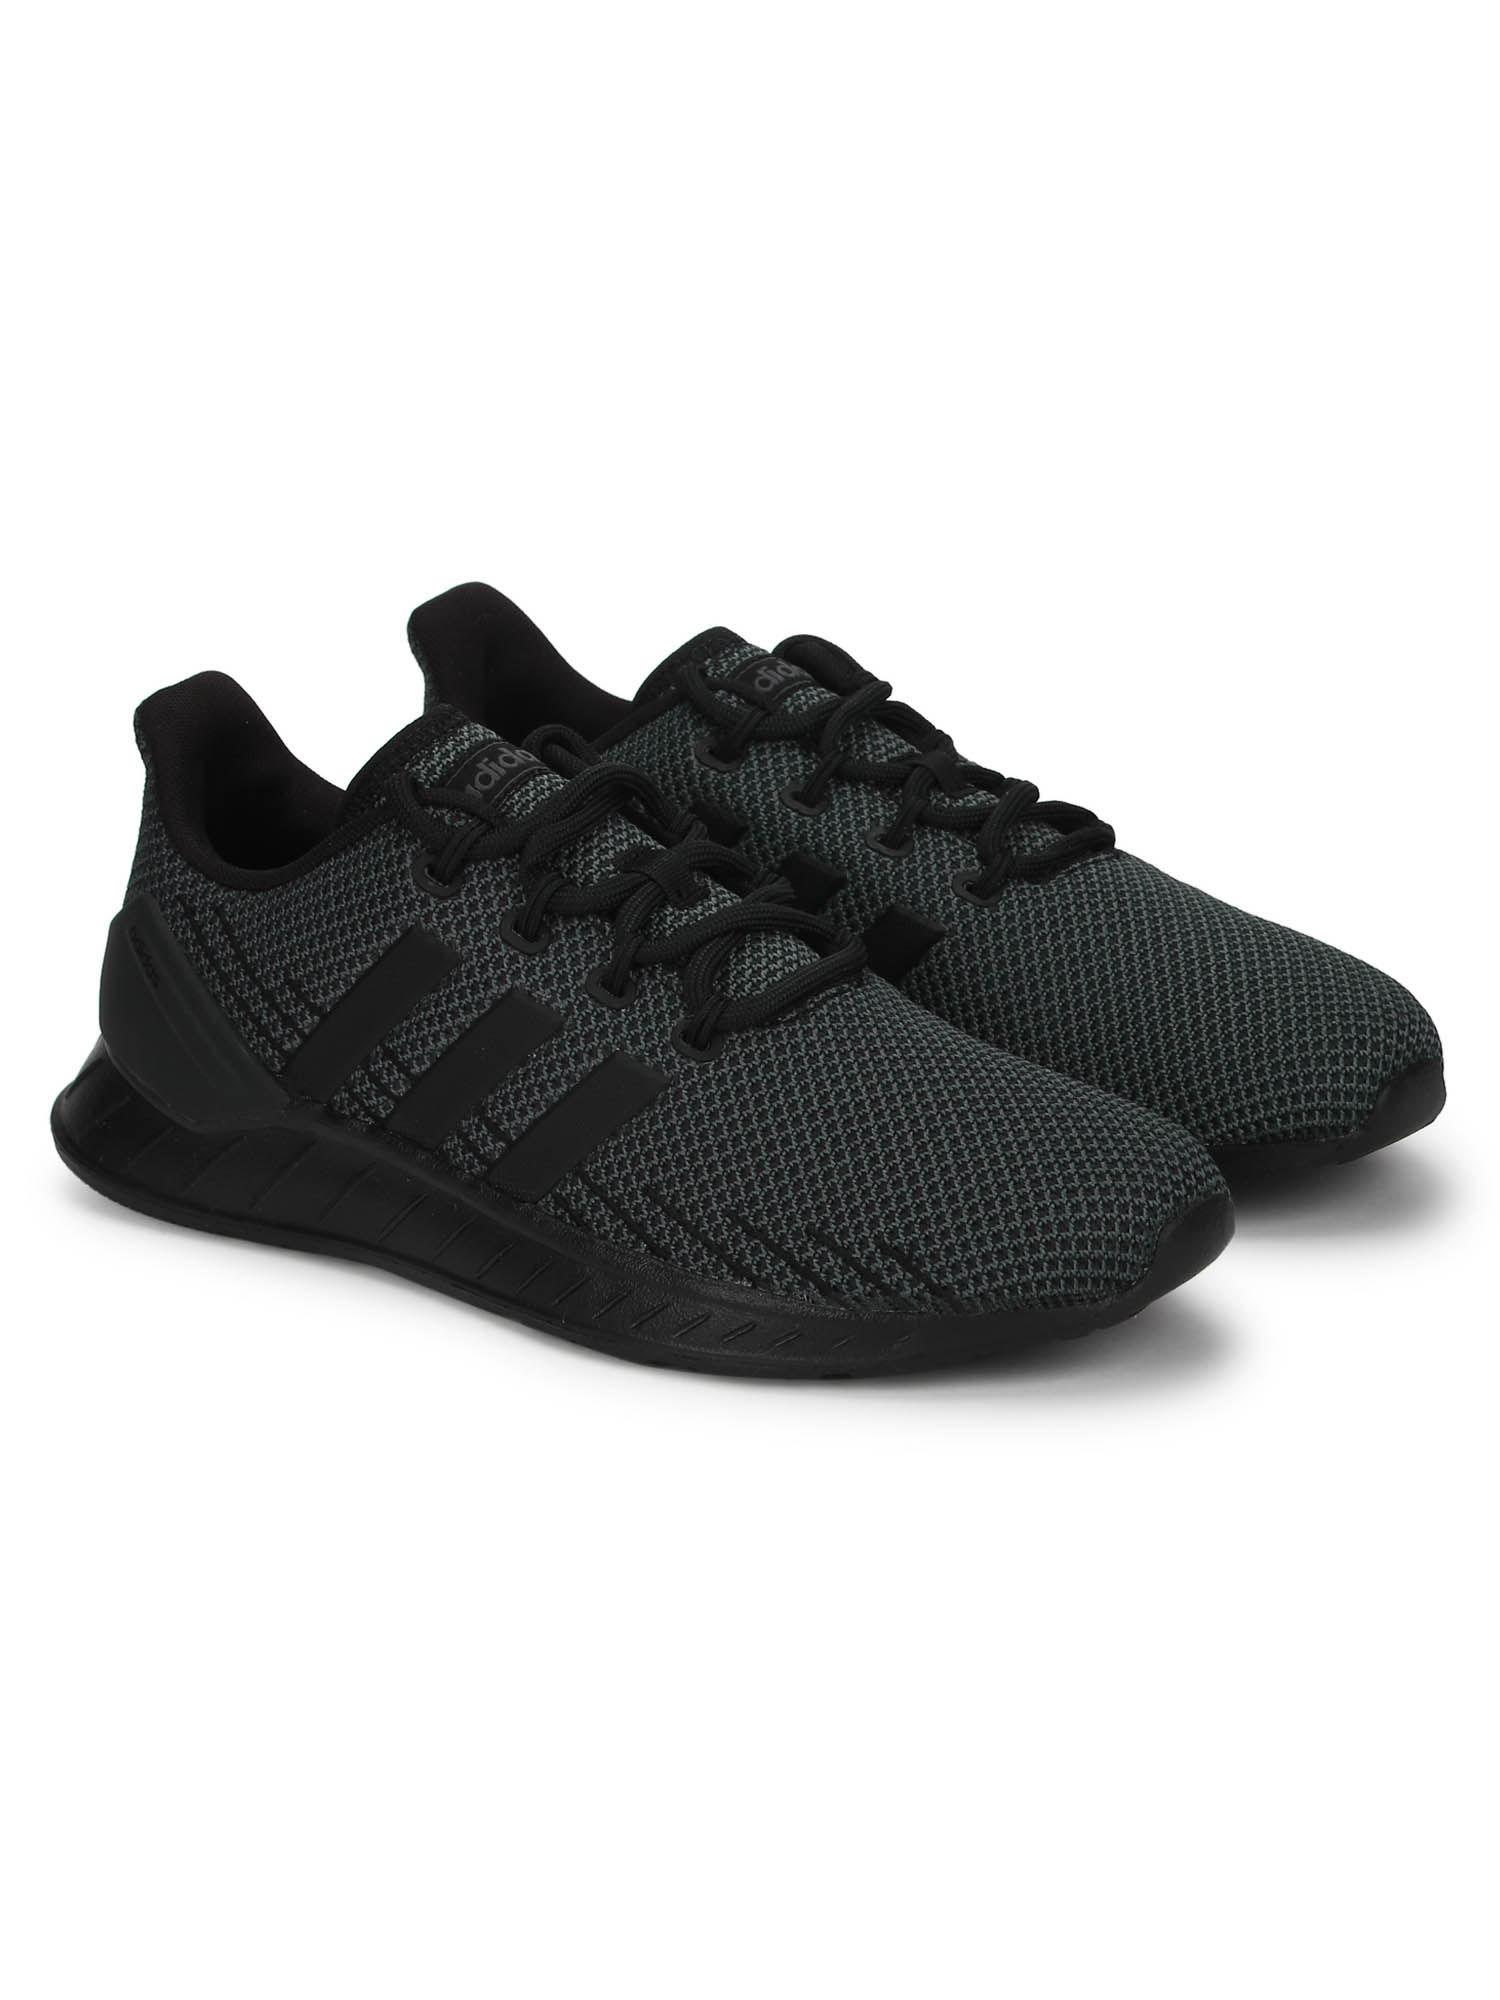 questar flow nxt black running shoes